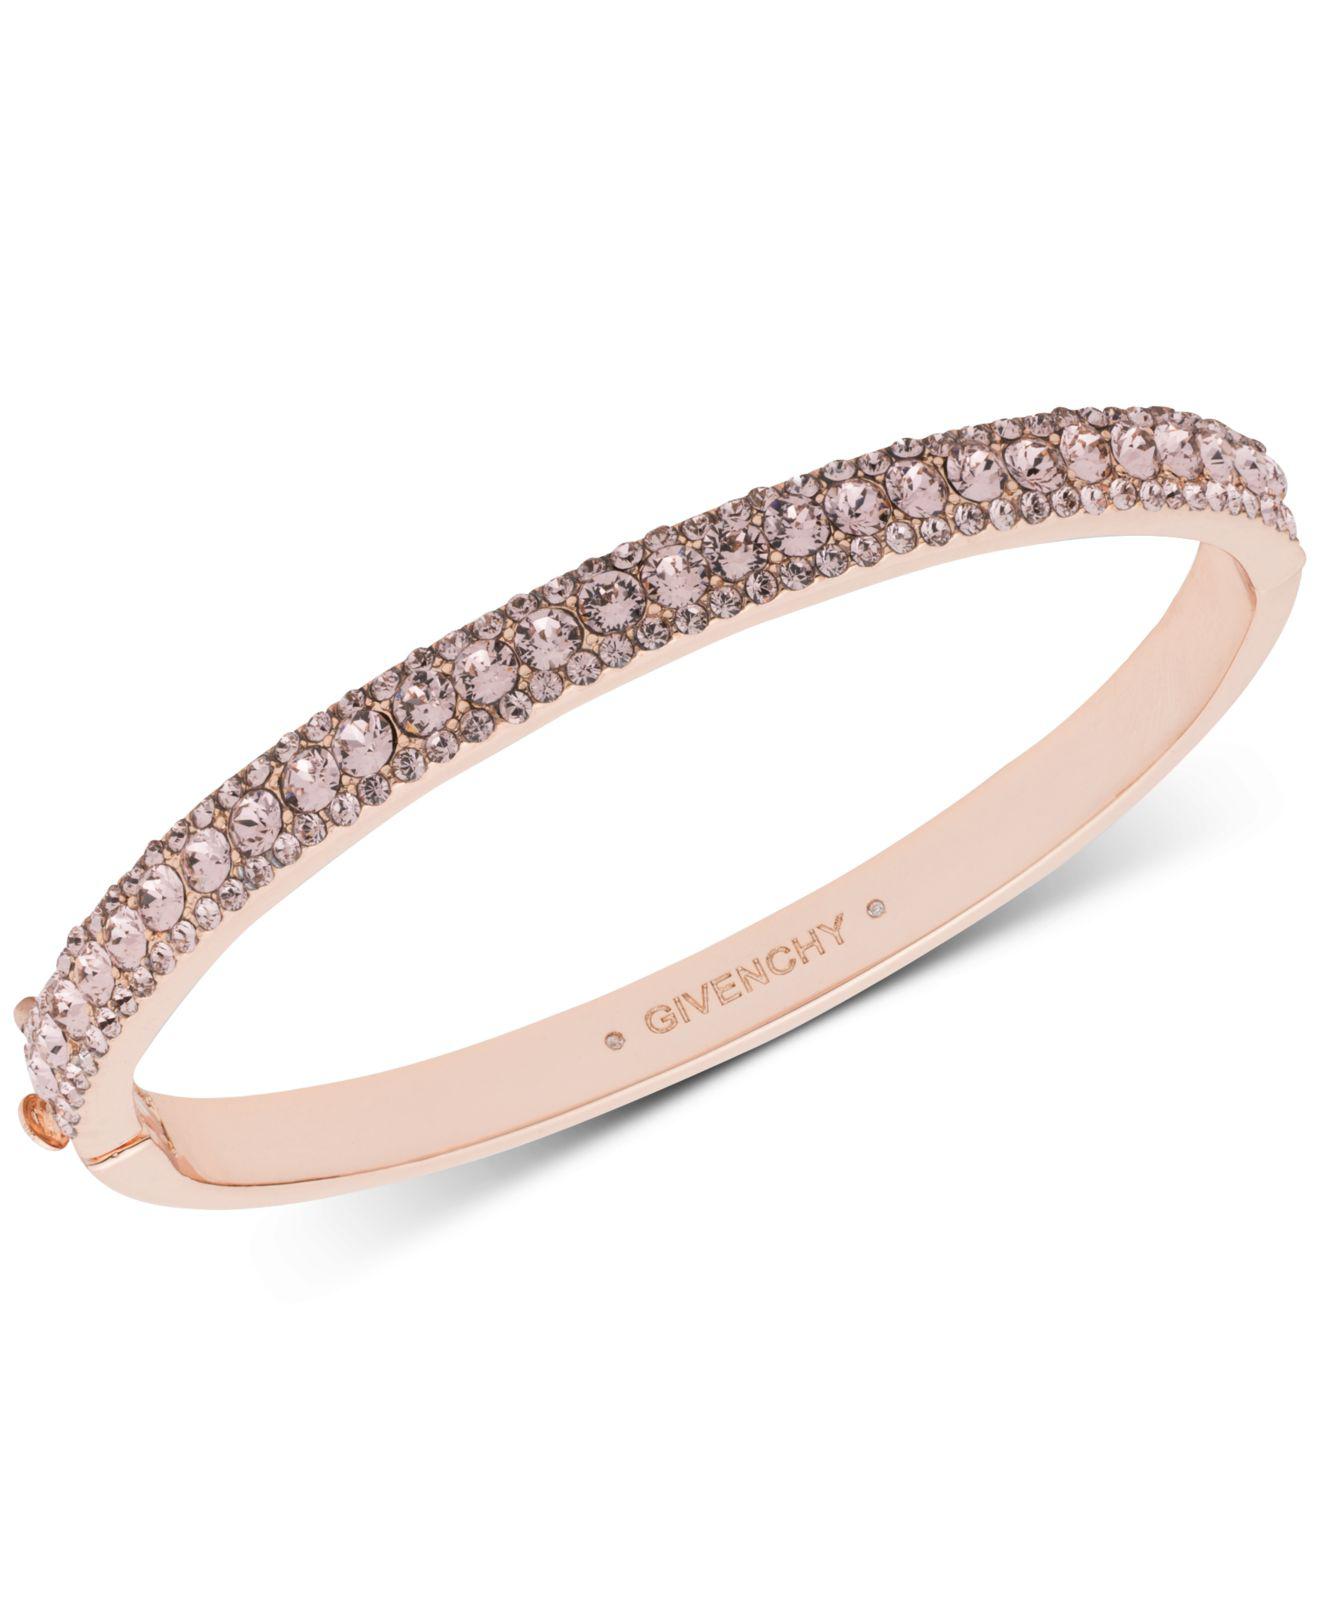 Givenchy Crystal Bangle Bracelet in 